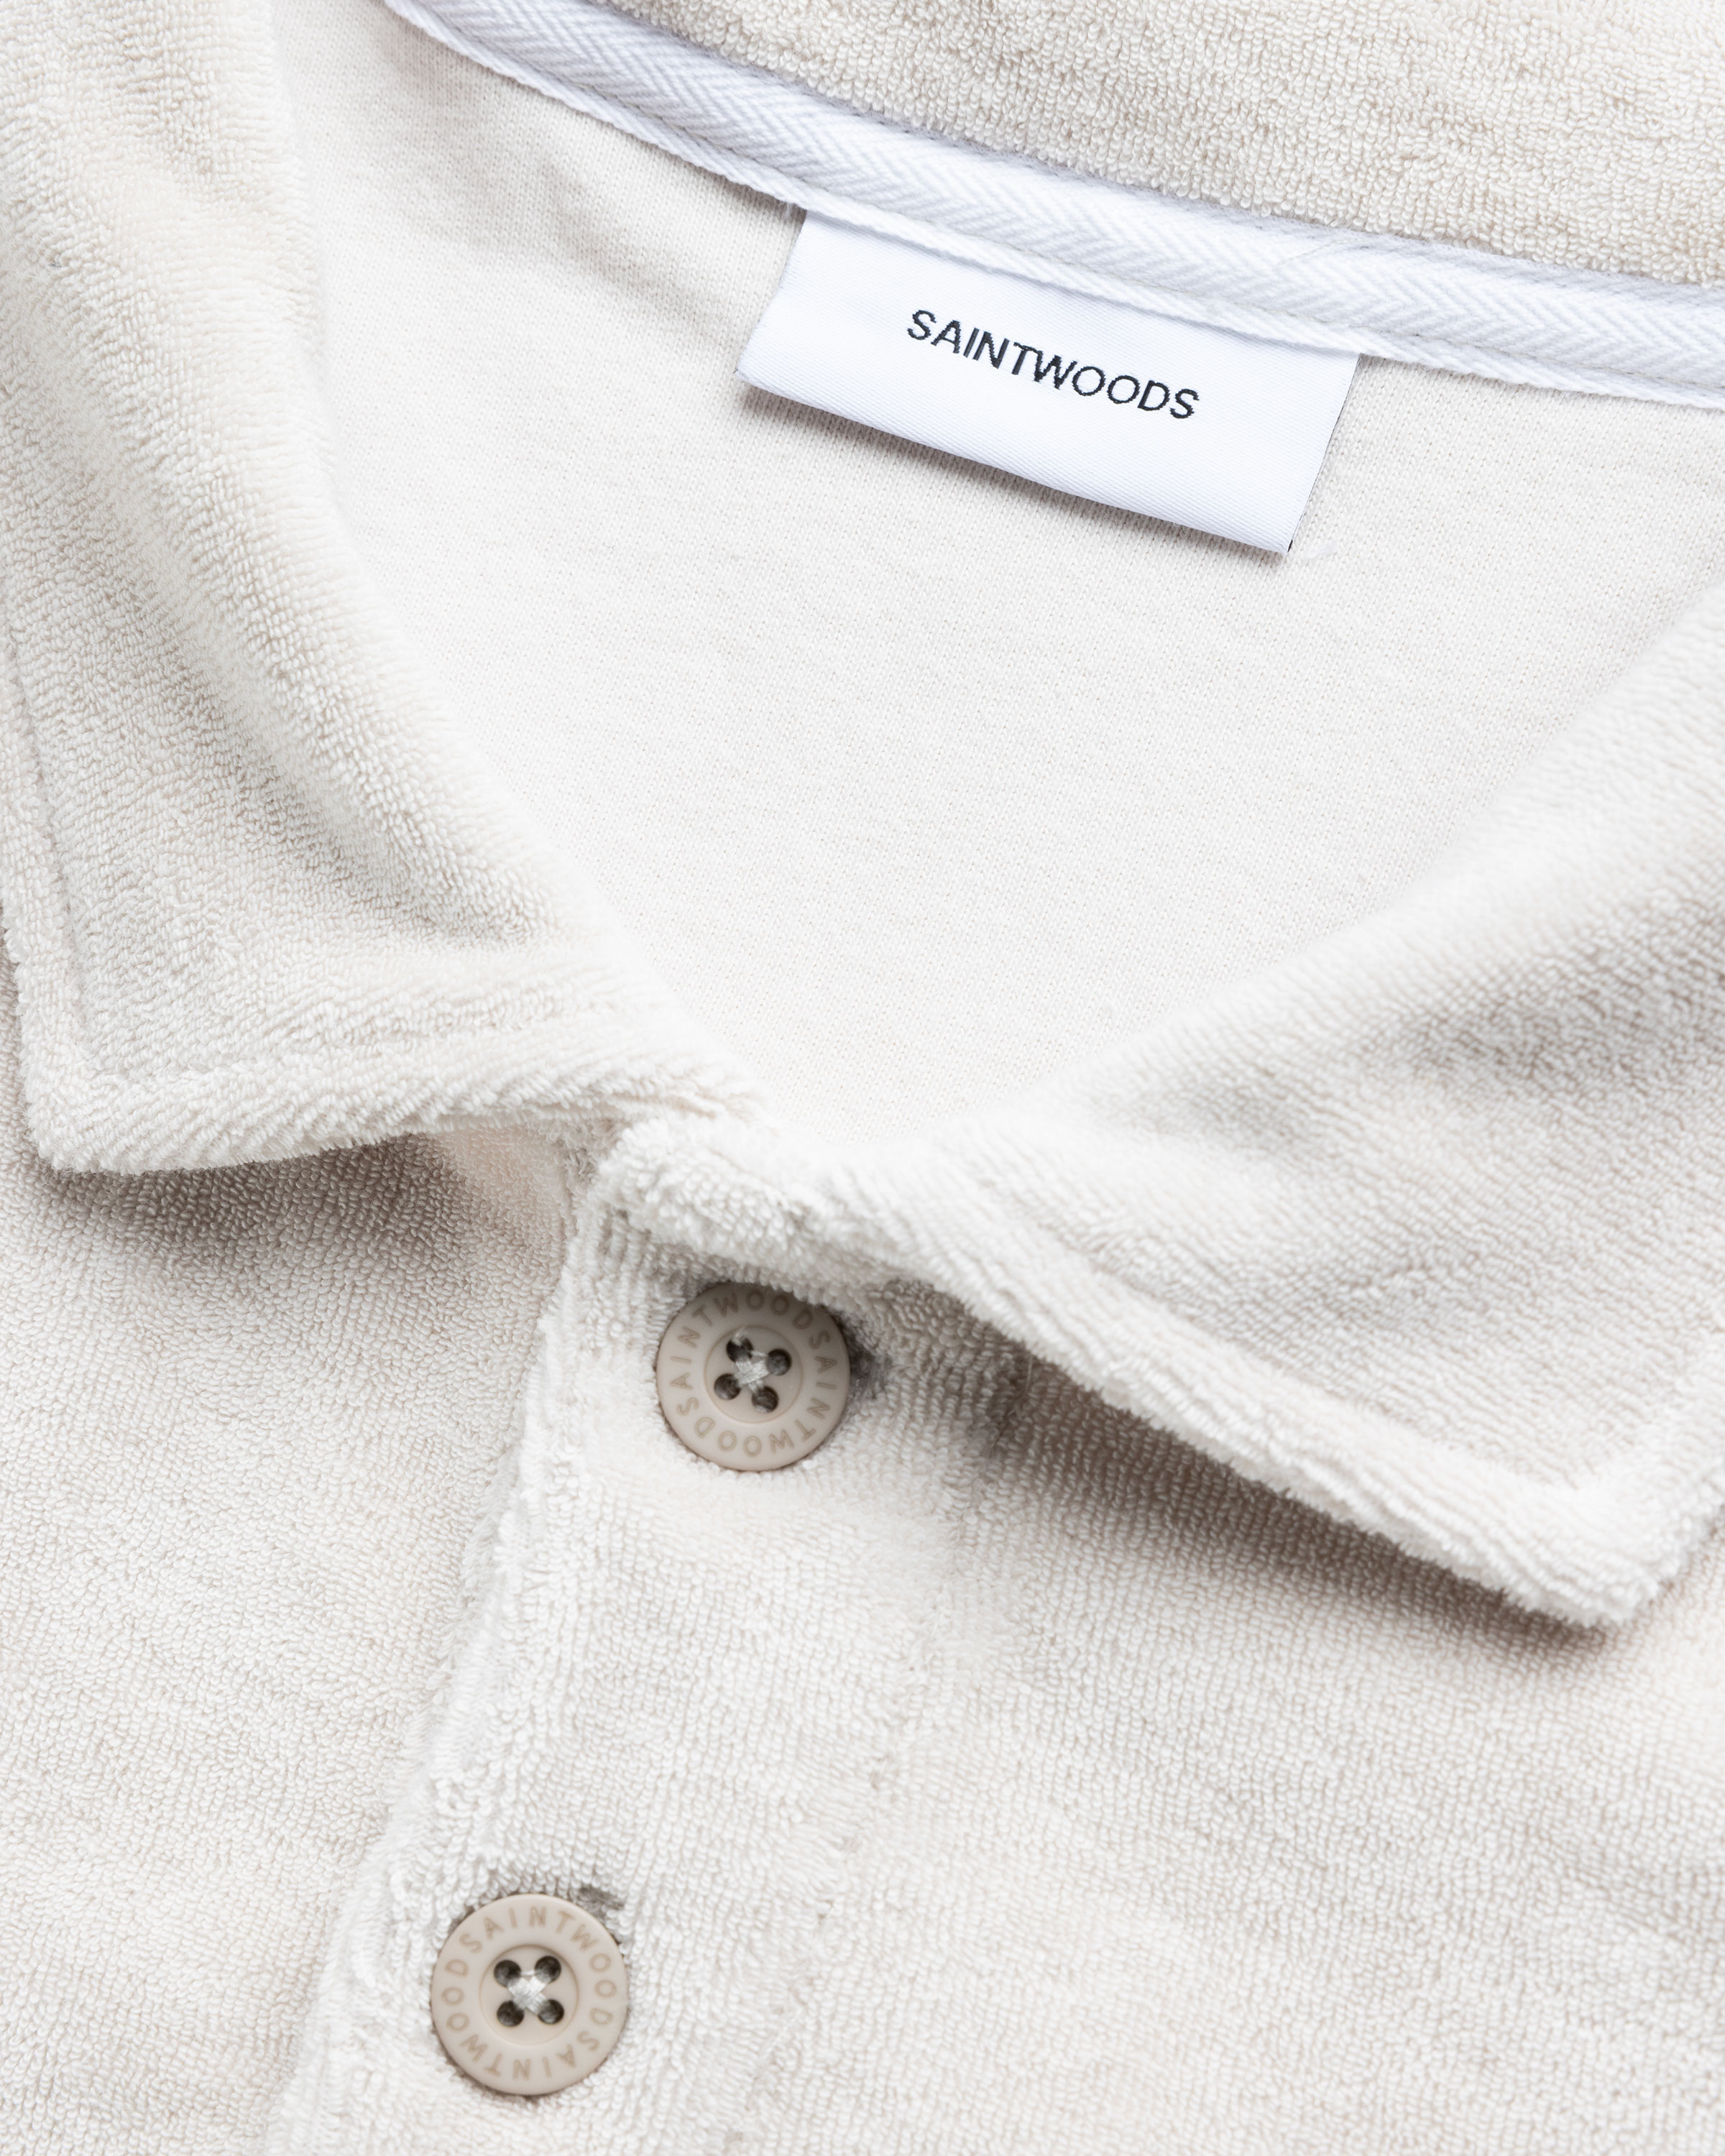 Saintwoods - Terry Cotton Polo Light Grey - Clothing - Grey - Image 6